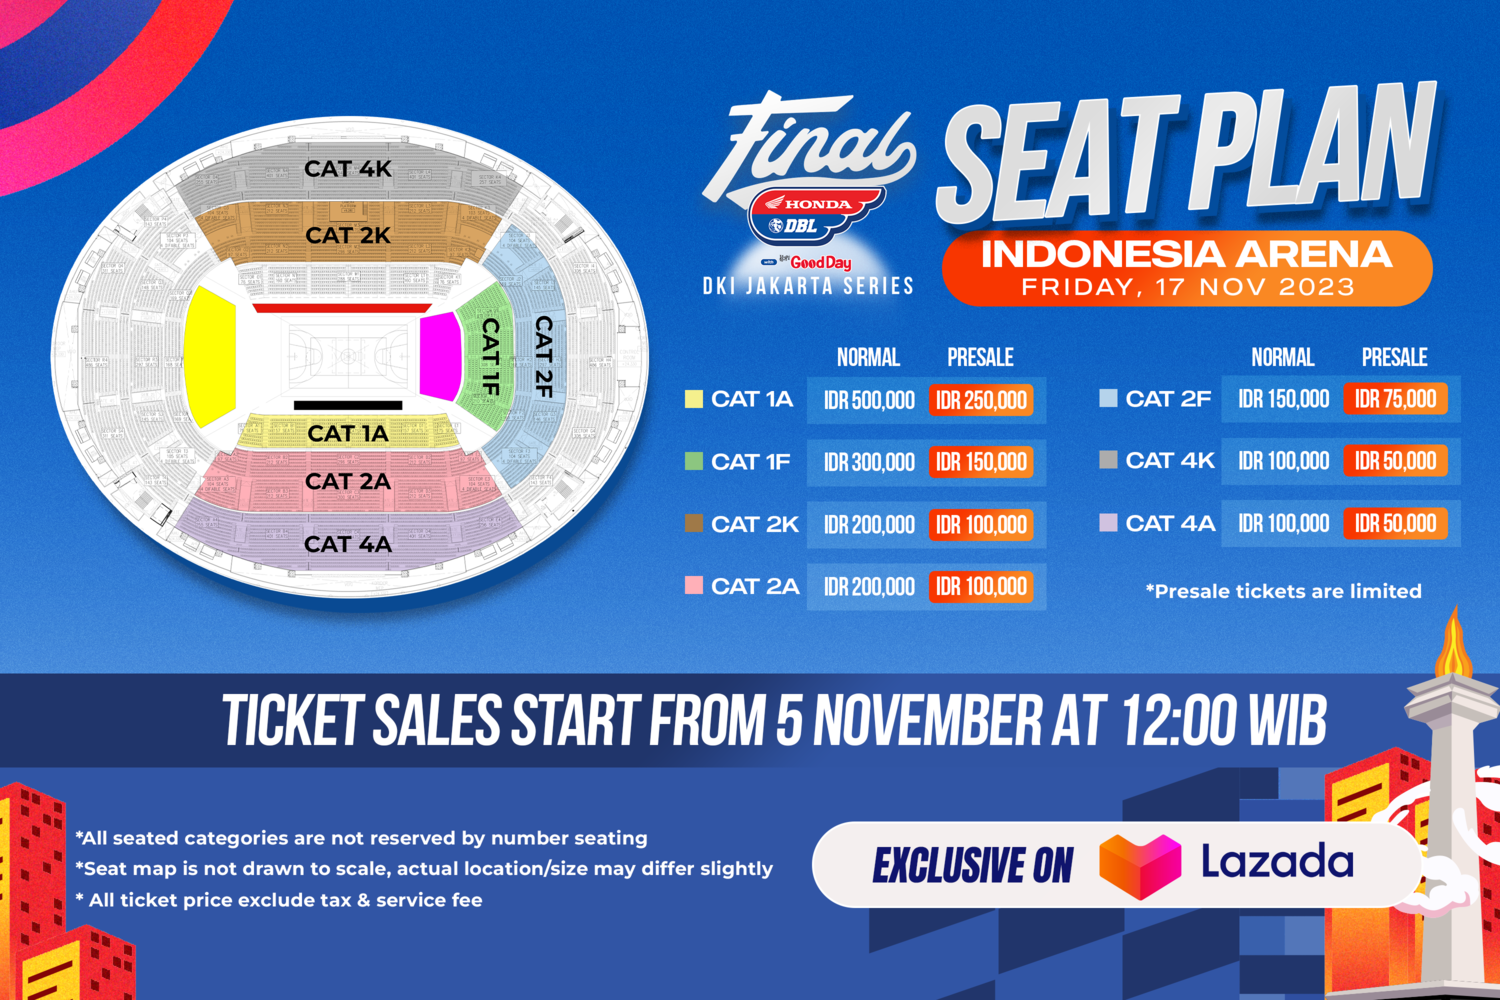 Seat Plan Tiket Final Dbl Jakarta 2023 Indonesia Arena Lazada 2 